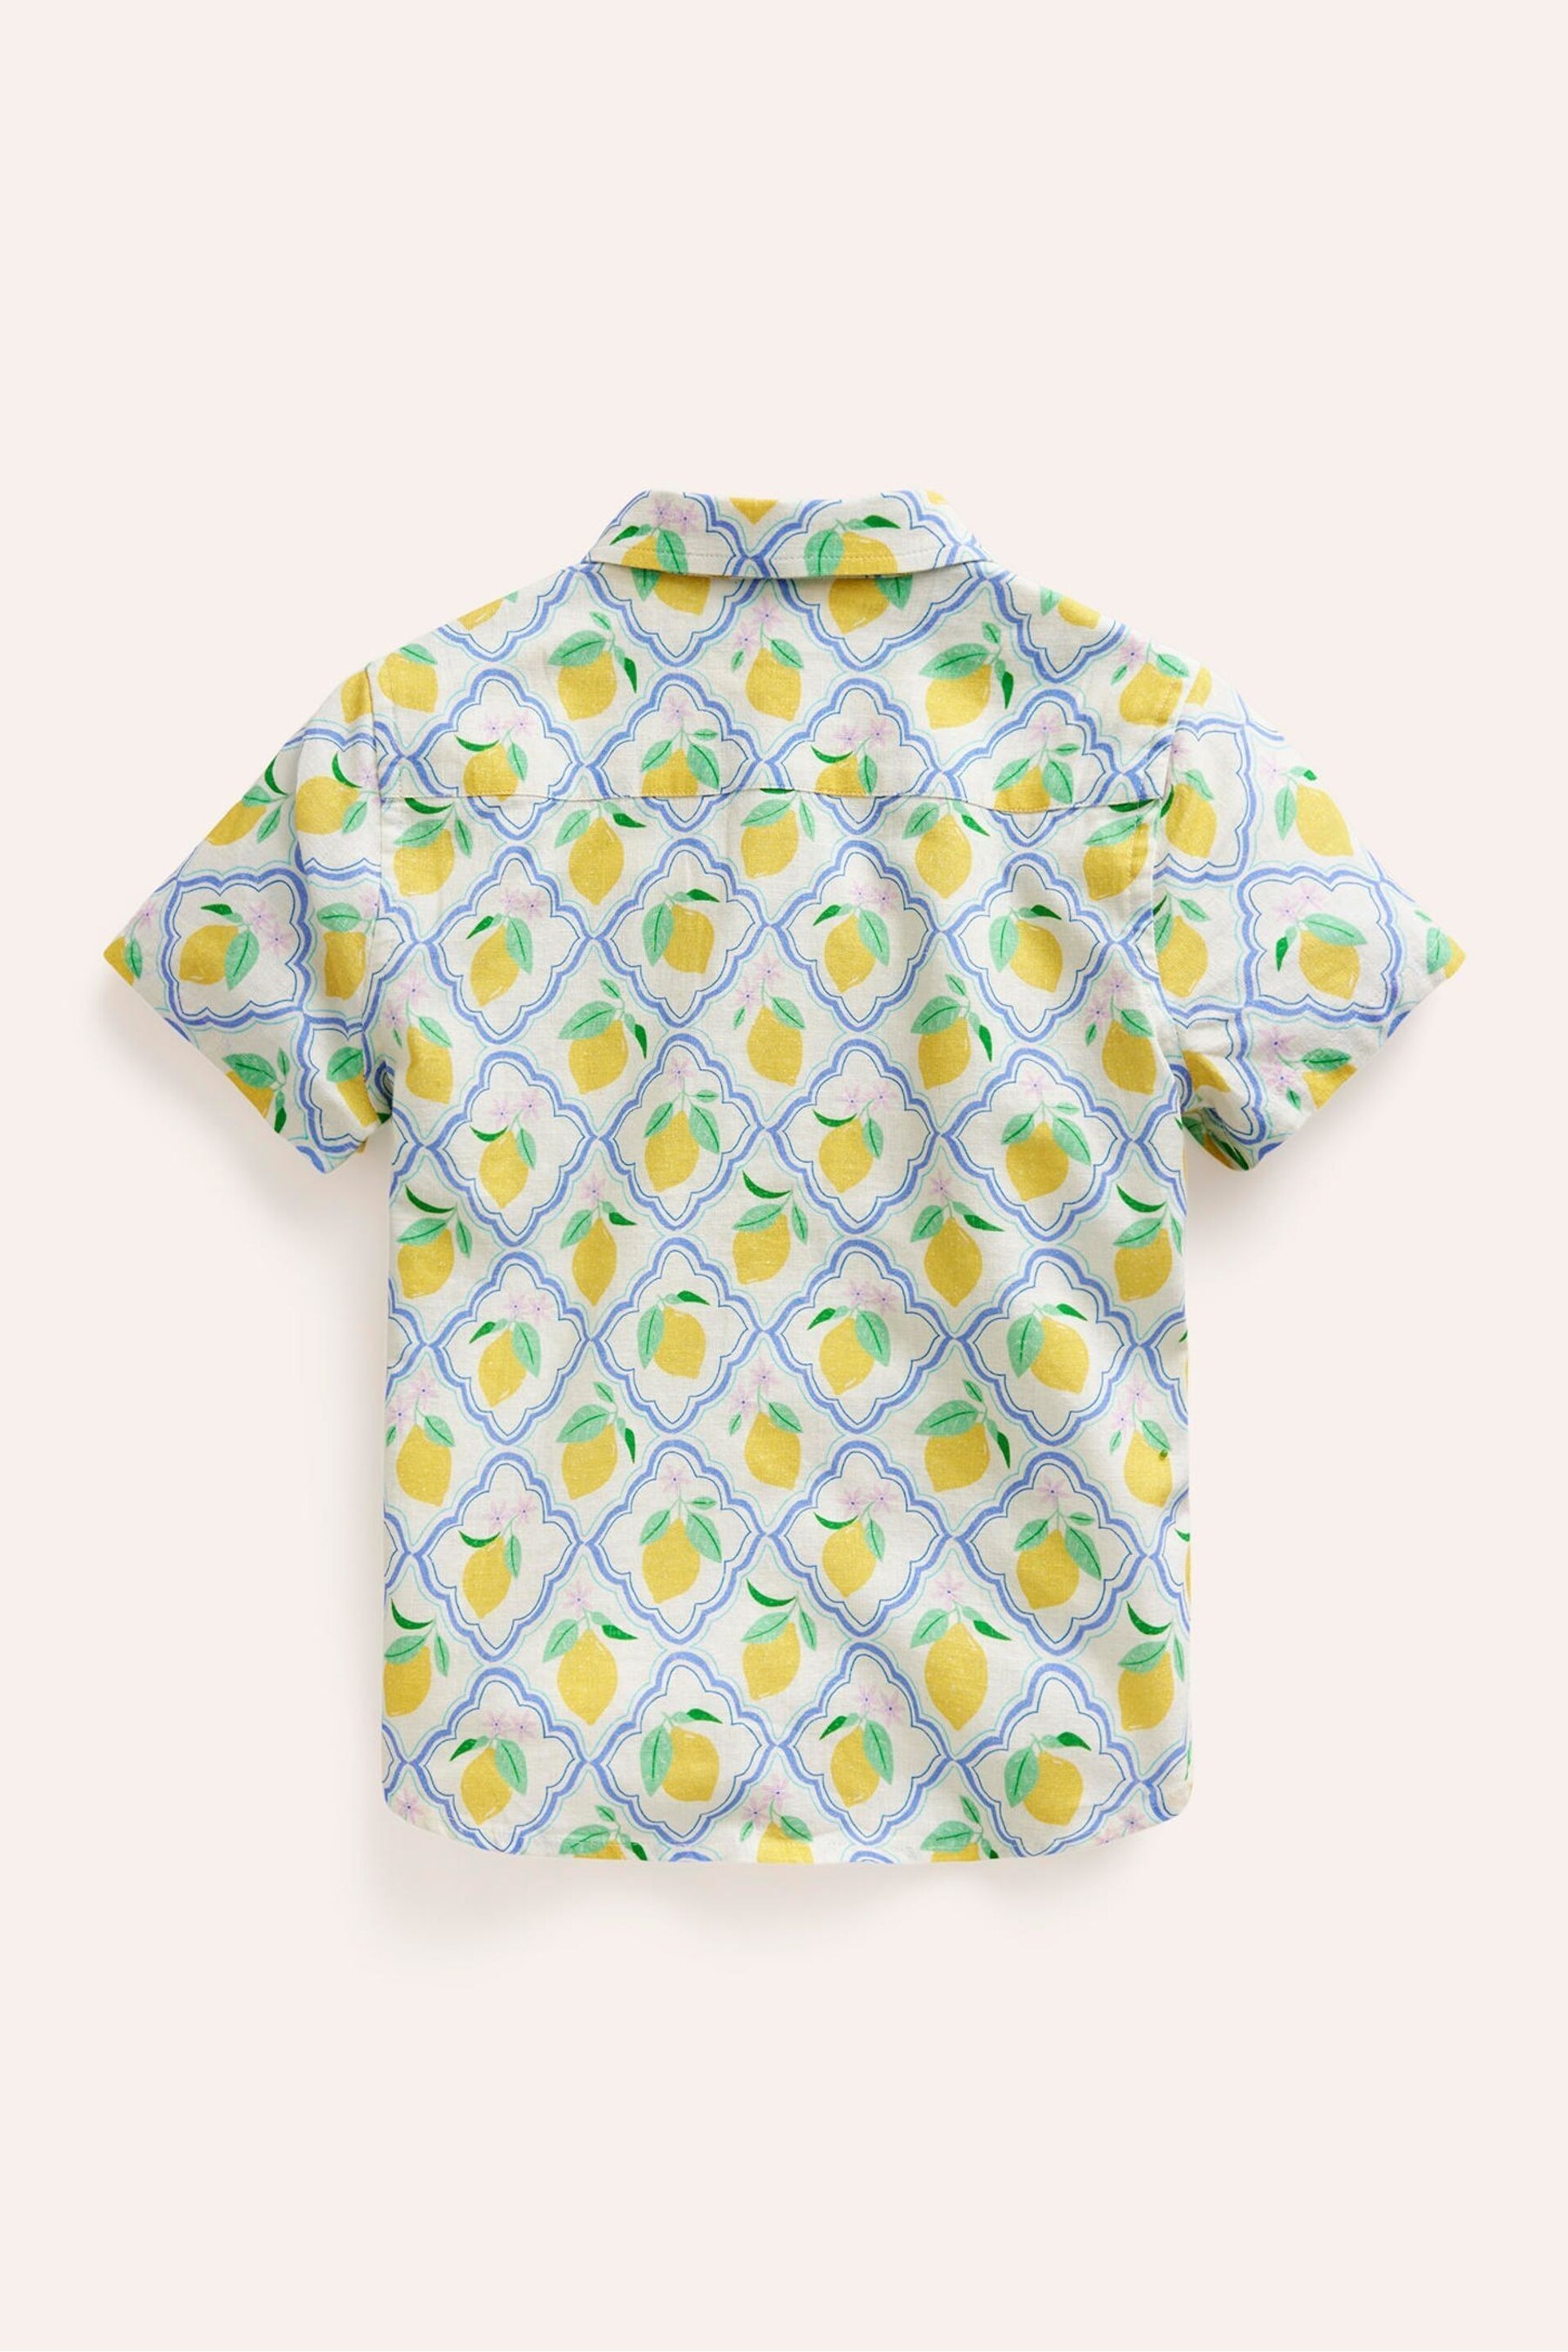 Boden Yellow lemon Cotton Linen Shirt - Image 6 of 7